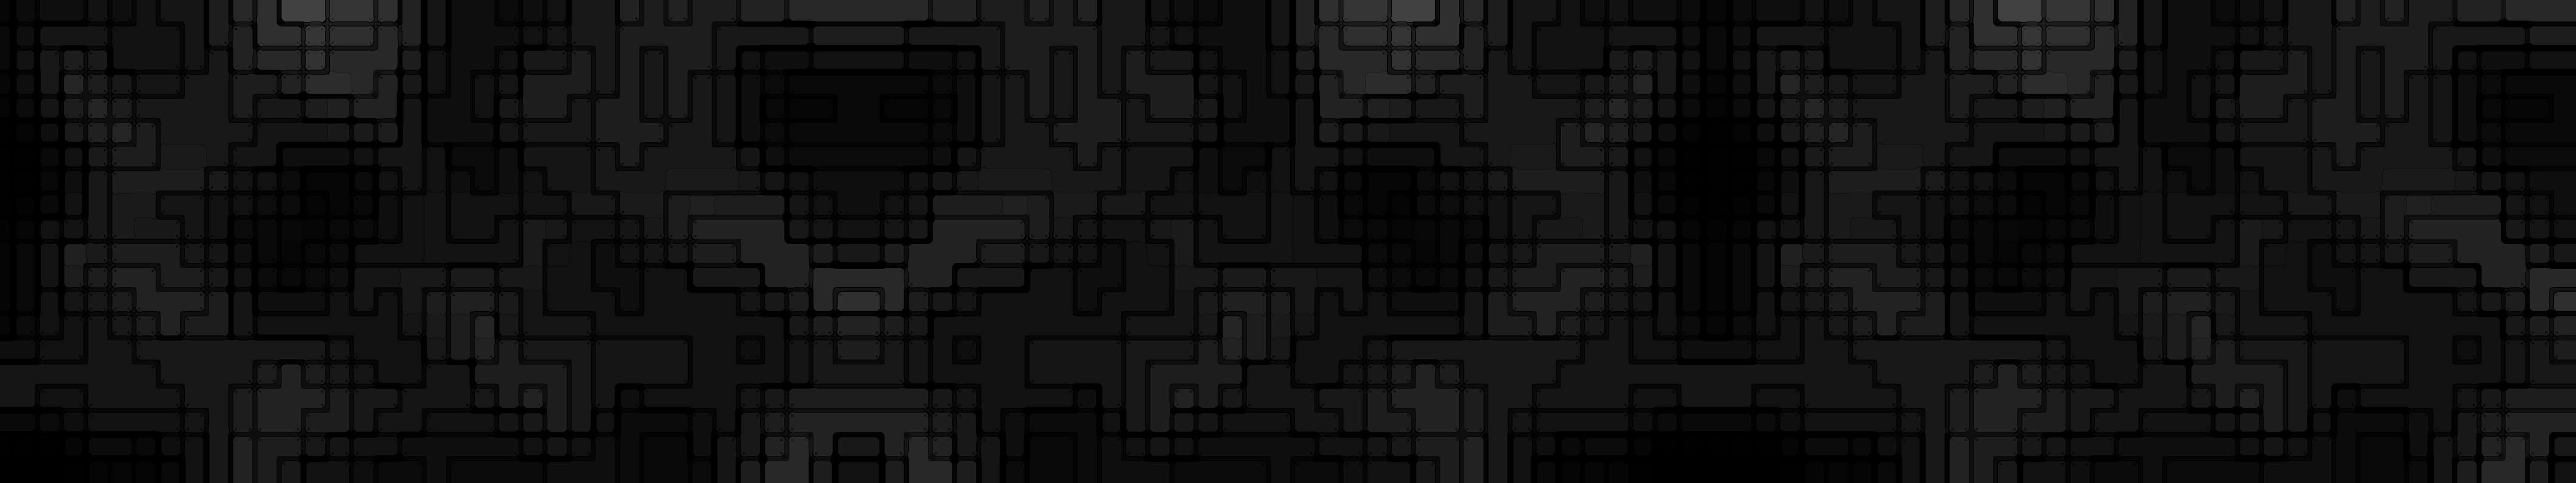 Geometrischesfenster Muster Dunkel Drei-monitor Wallpaper